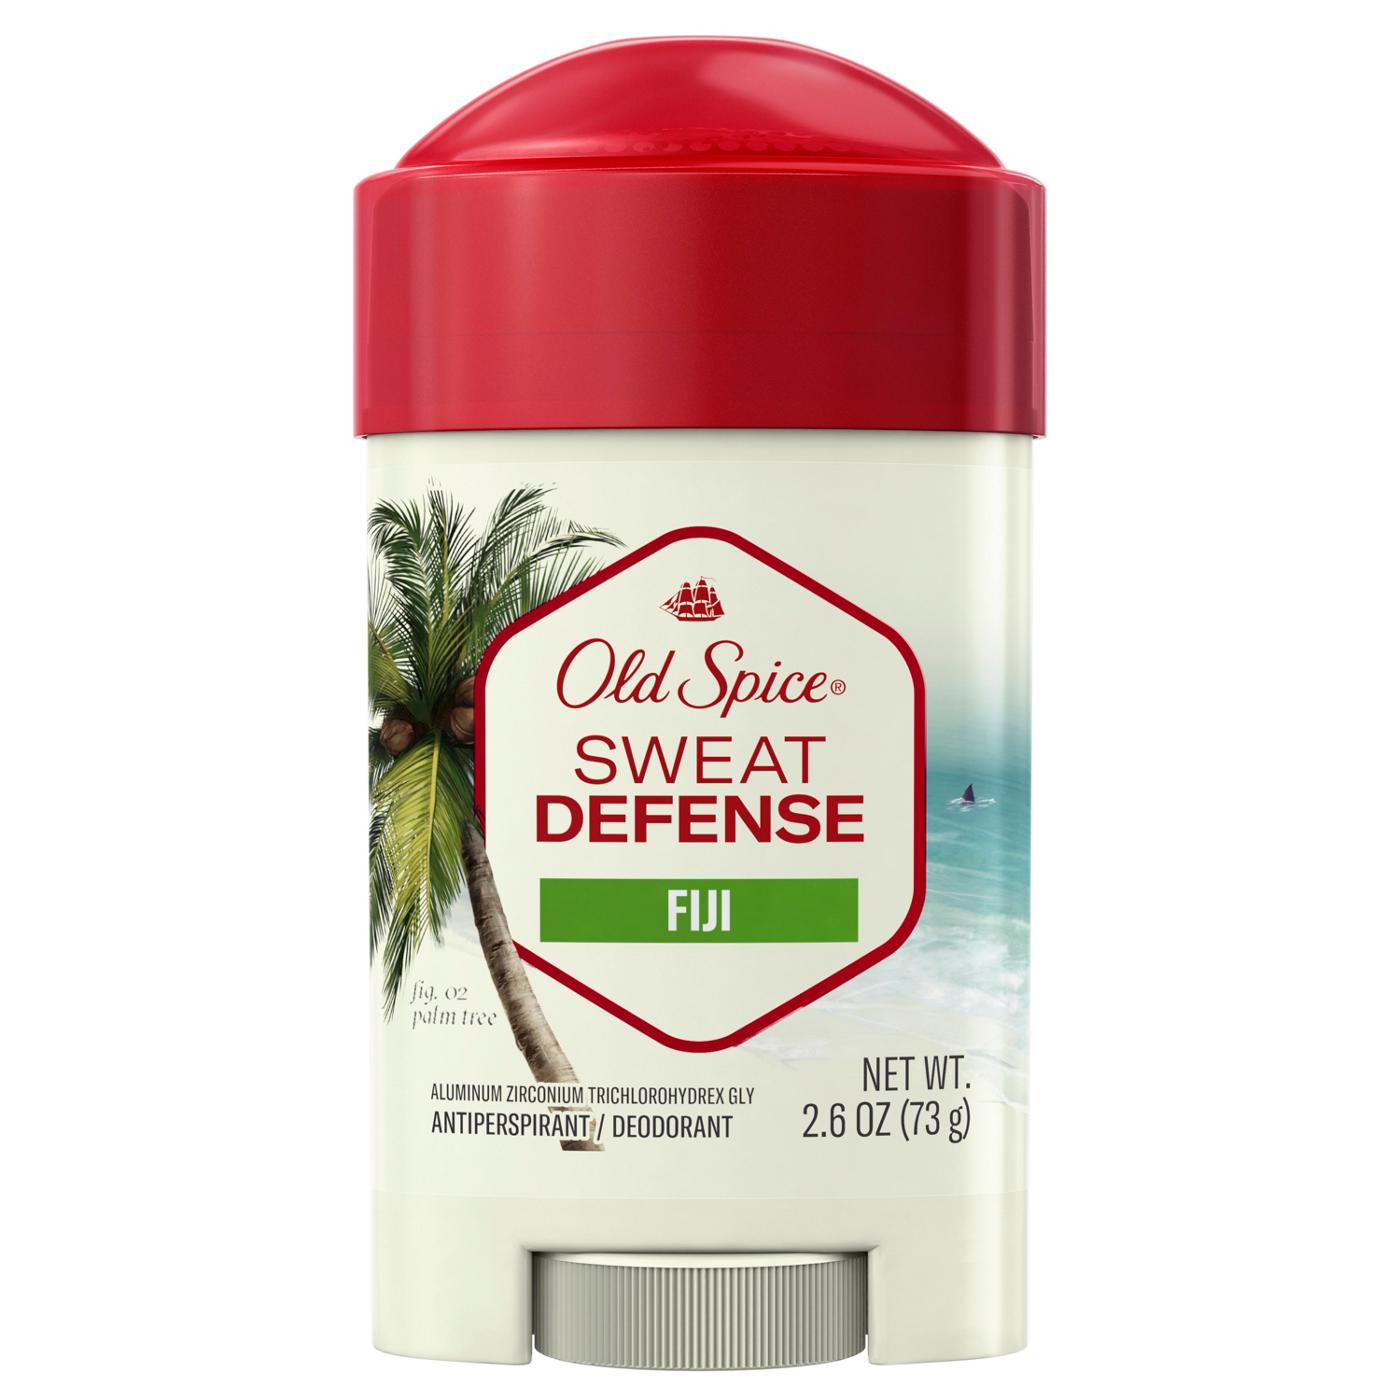 Old Spice Sweat Defense Antiperspirant Deodorant - Fiji; image 1 of 2